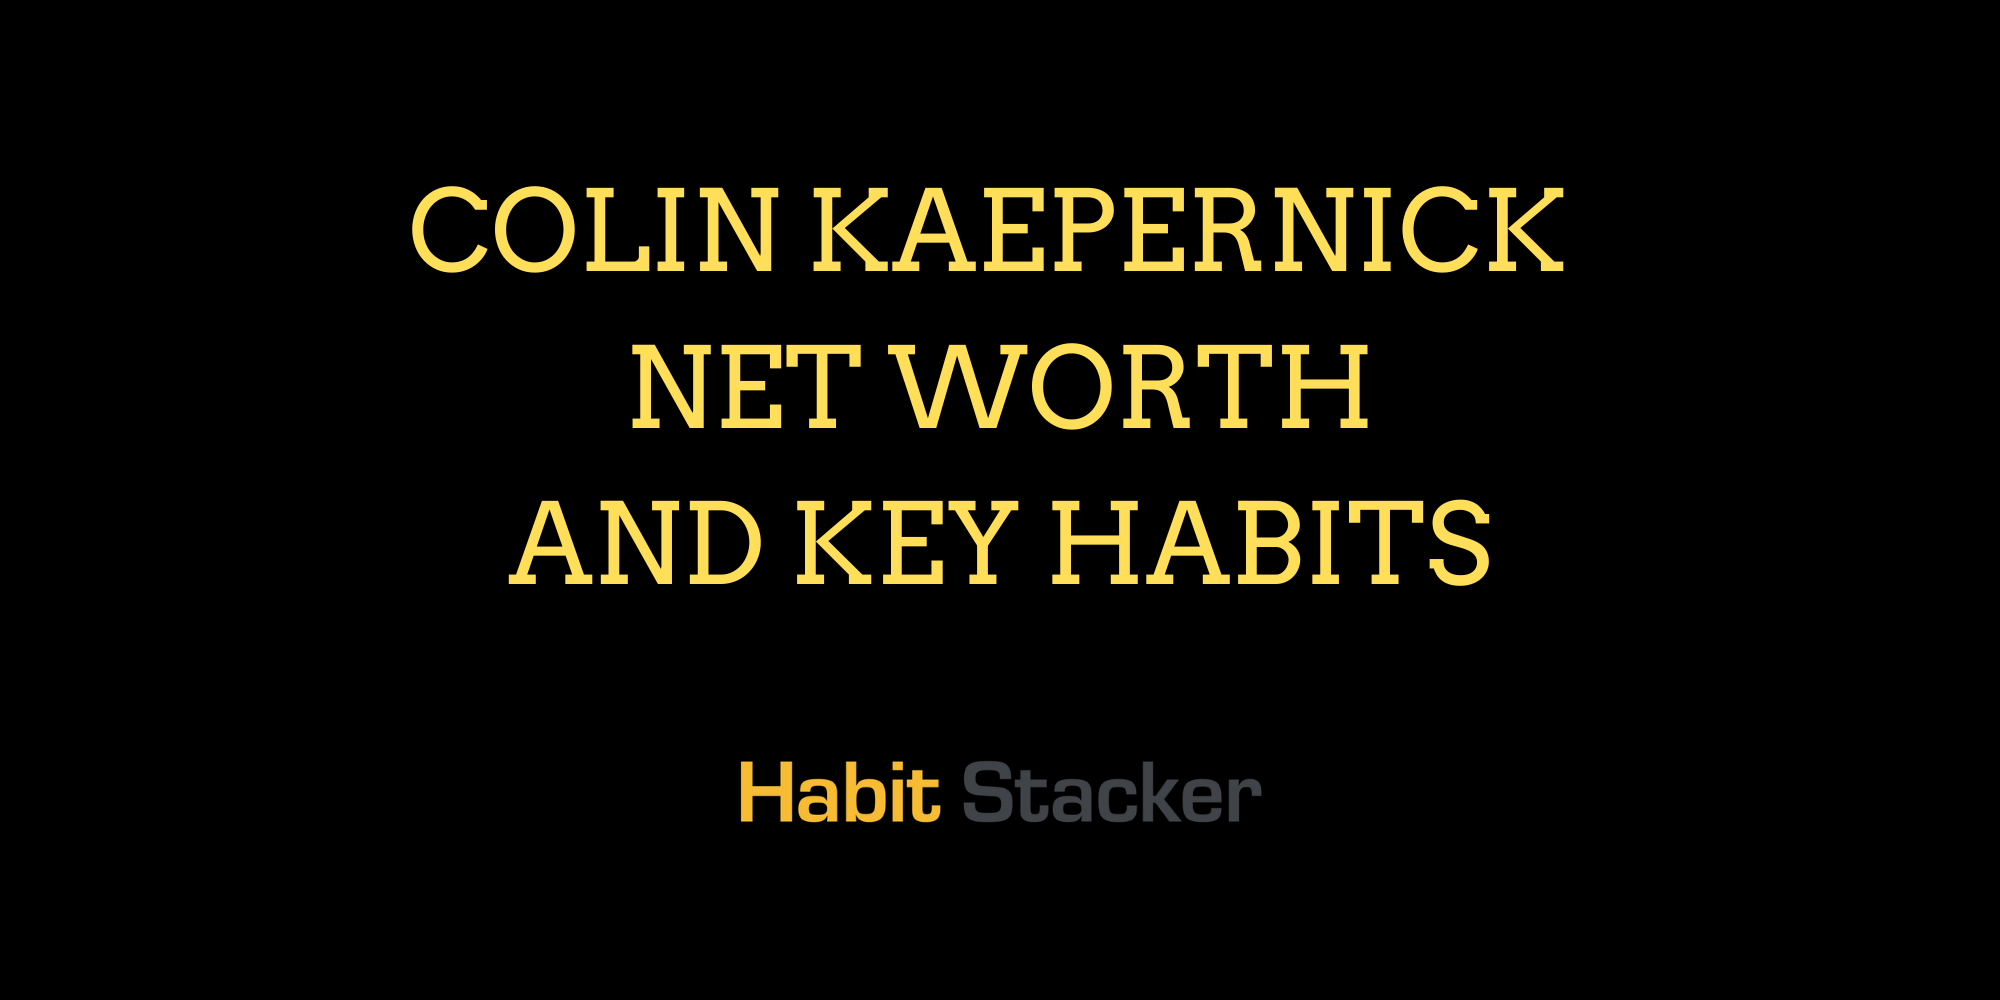 Colin Kaepernick Net Worth